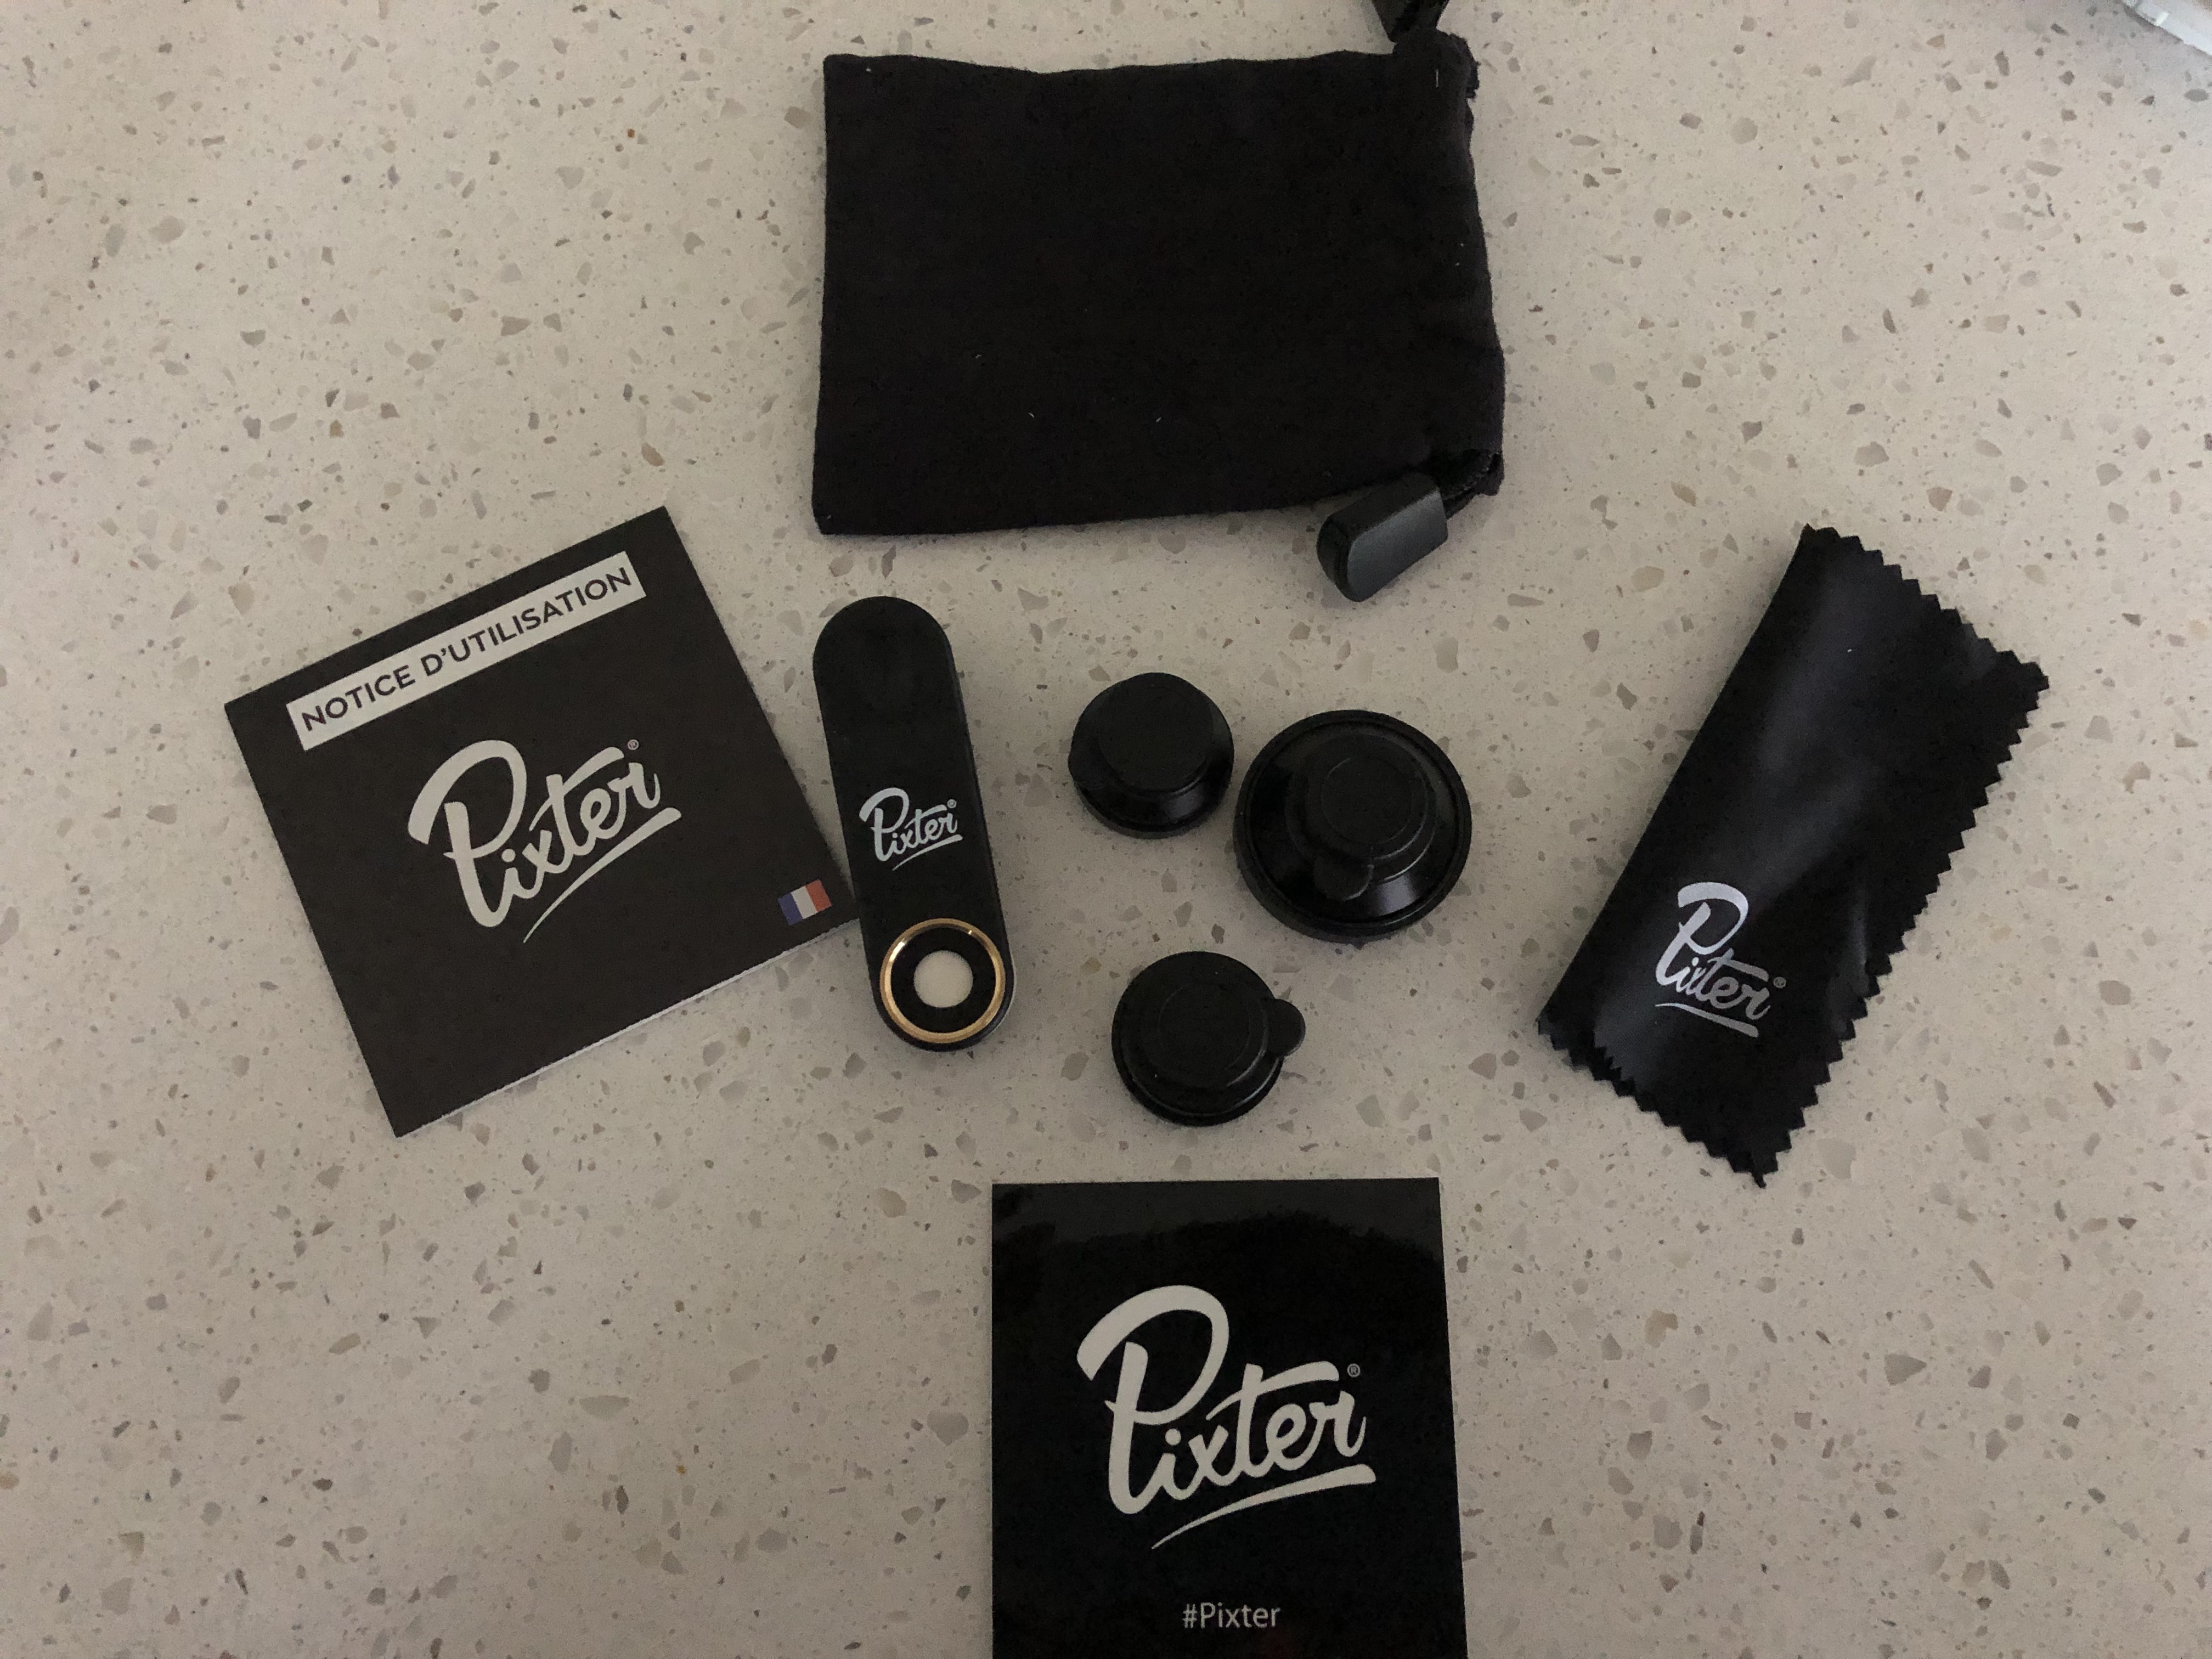 Pixter Starter Pack contents